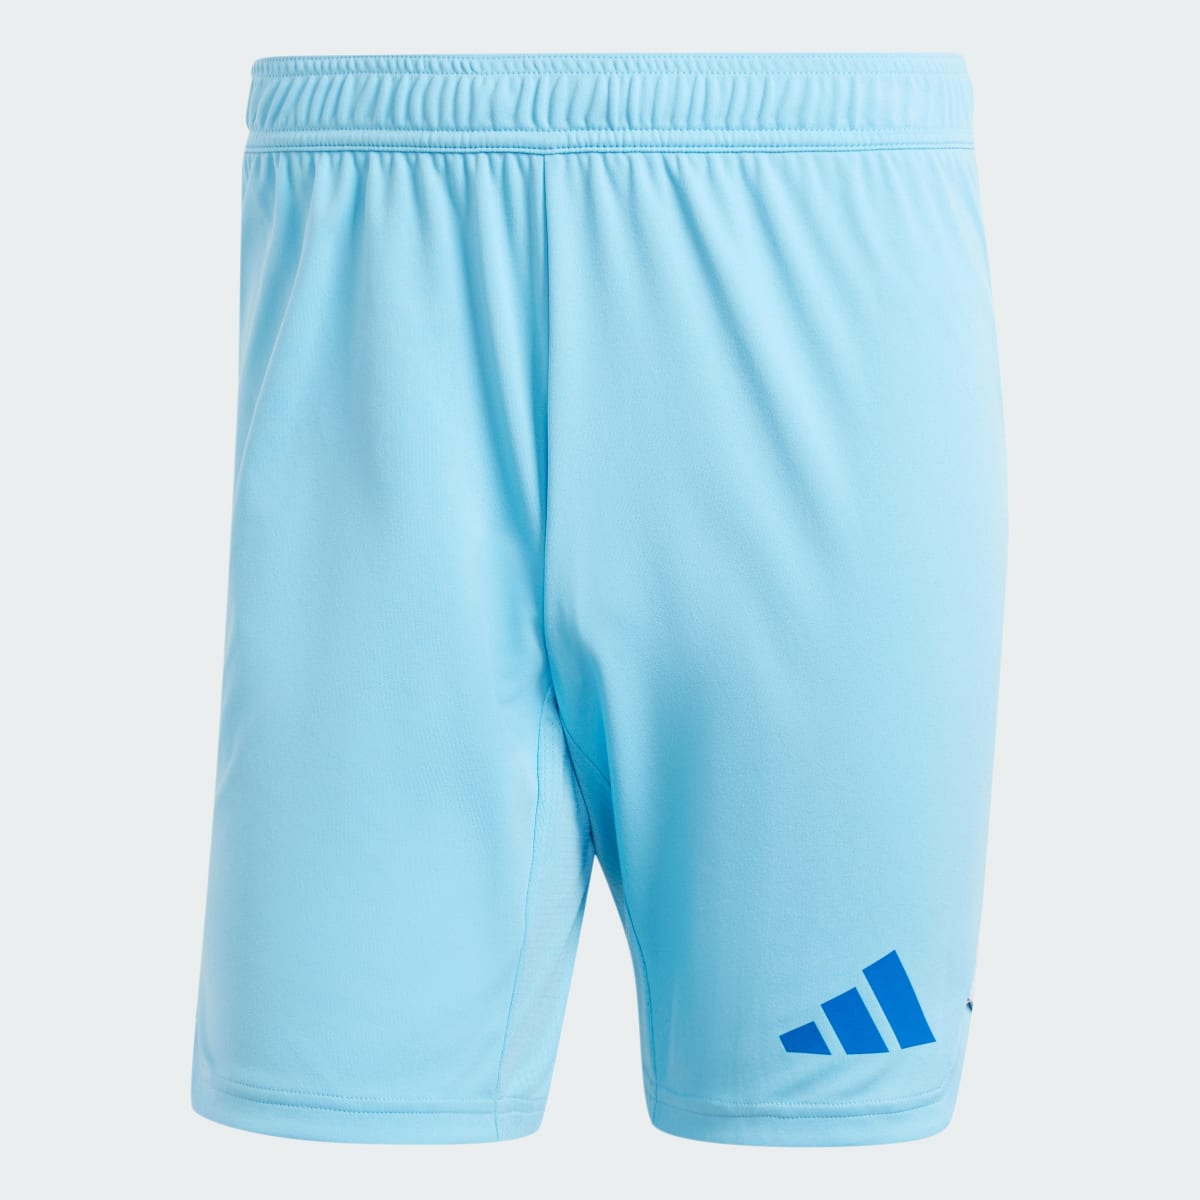 Adidas Tiro 24 Pro Goalkeeper Shorts. 4